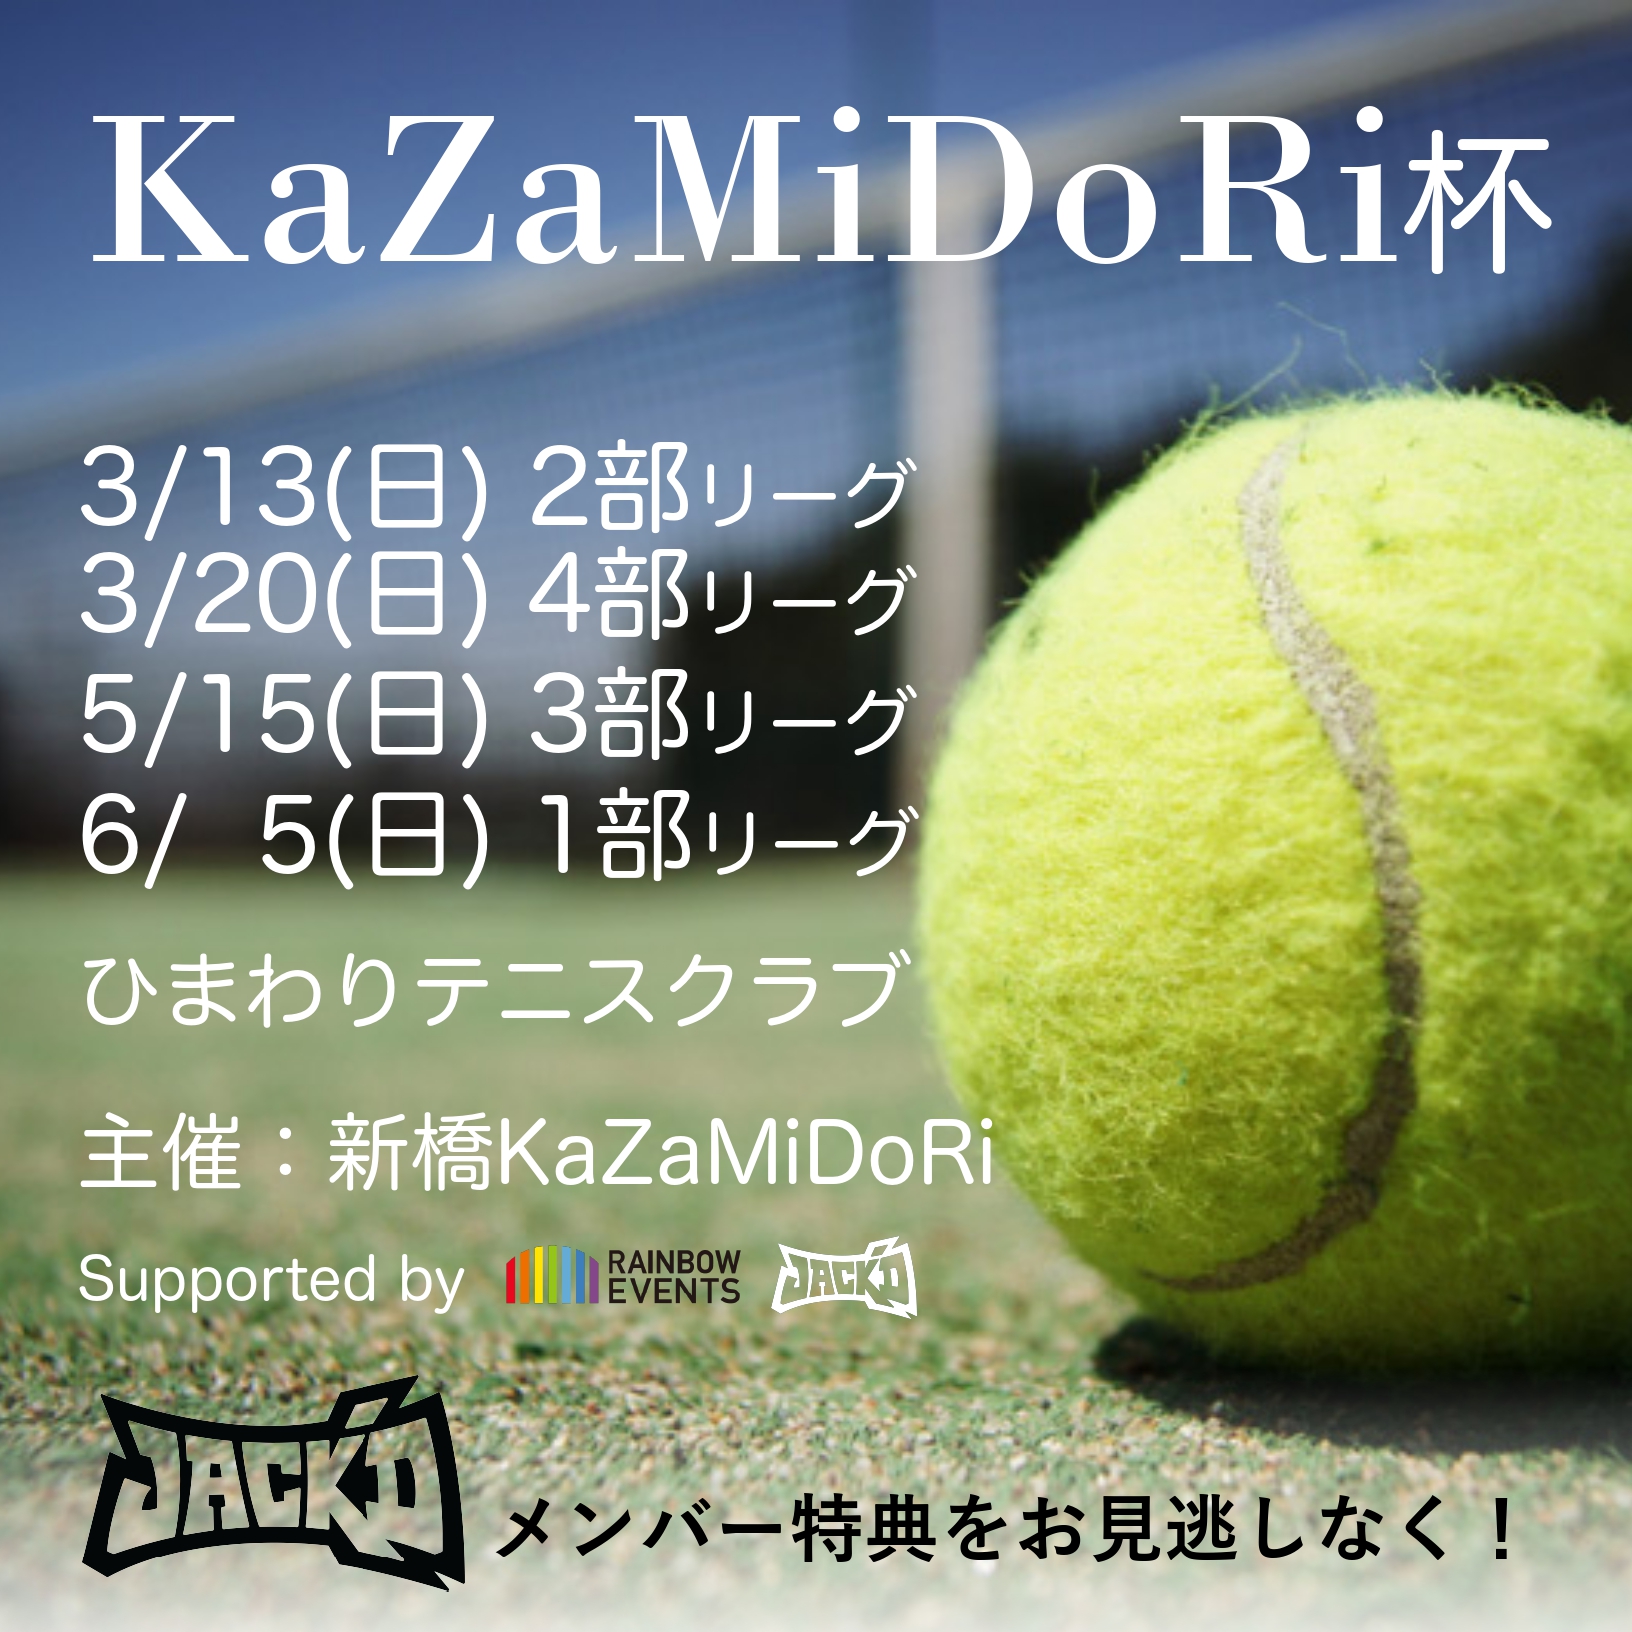 Kazamidori杯(テニス大会)